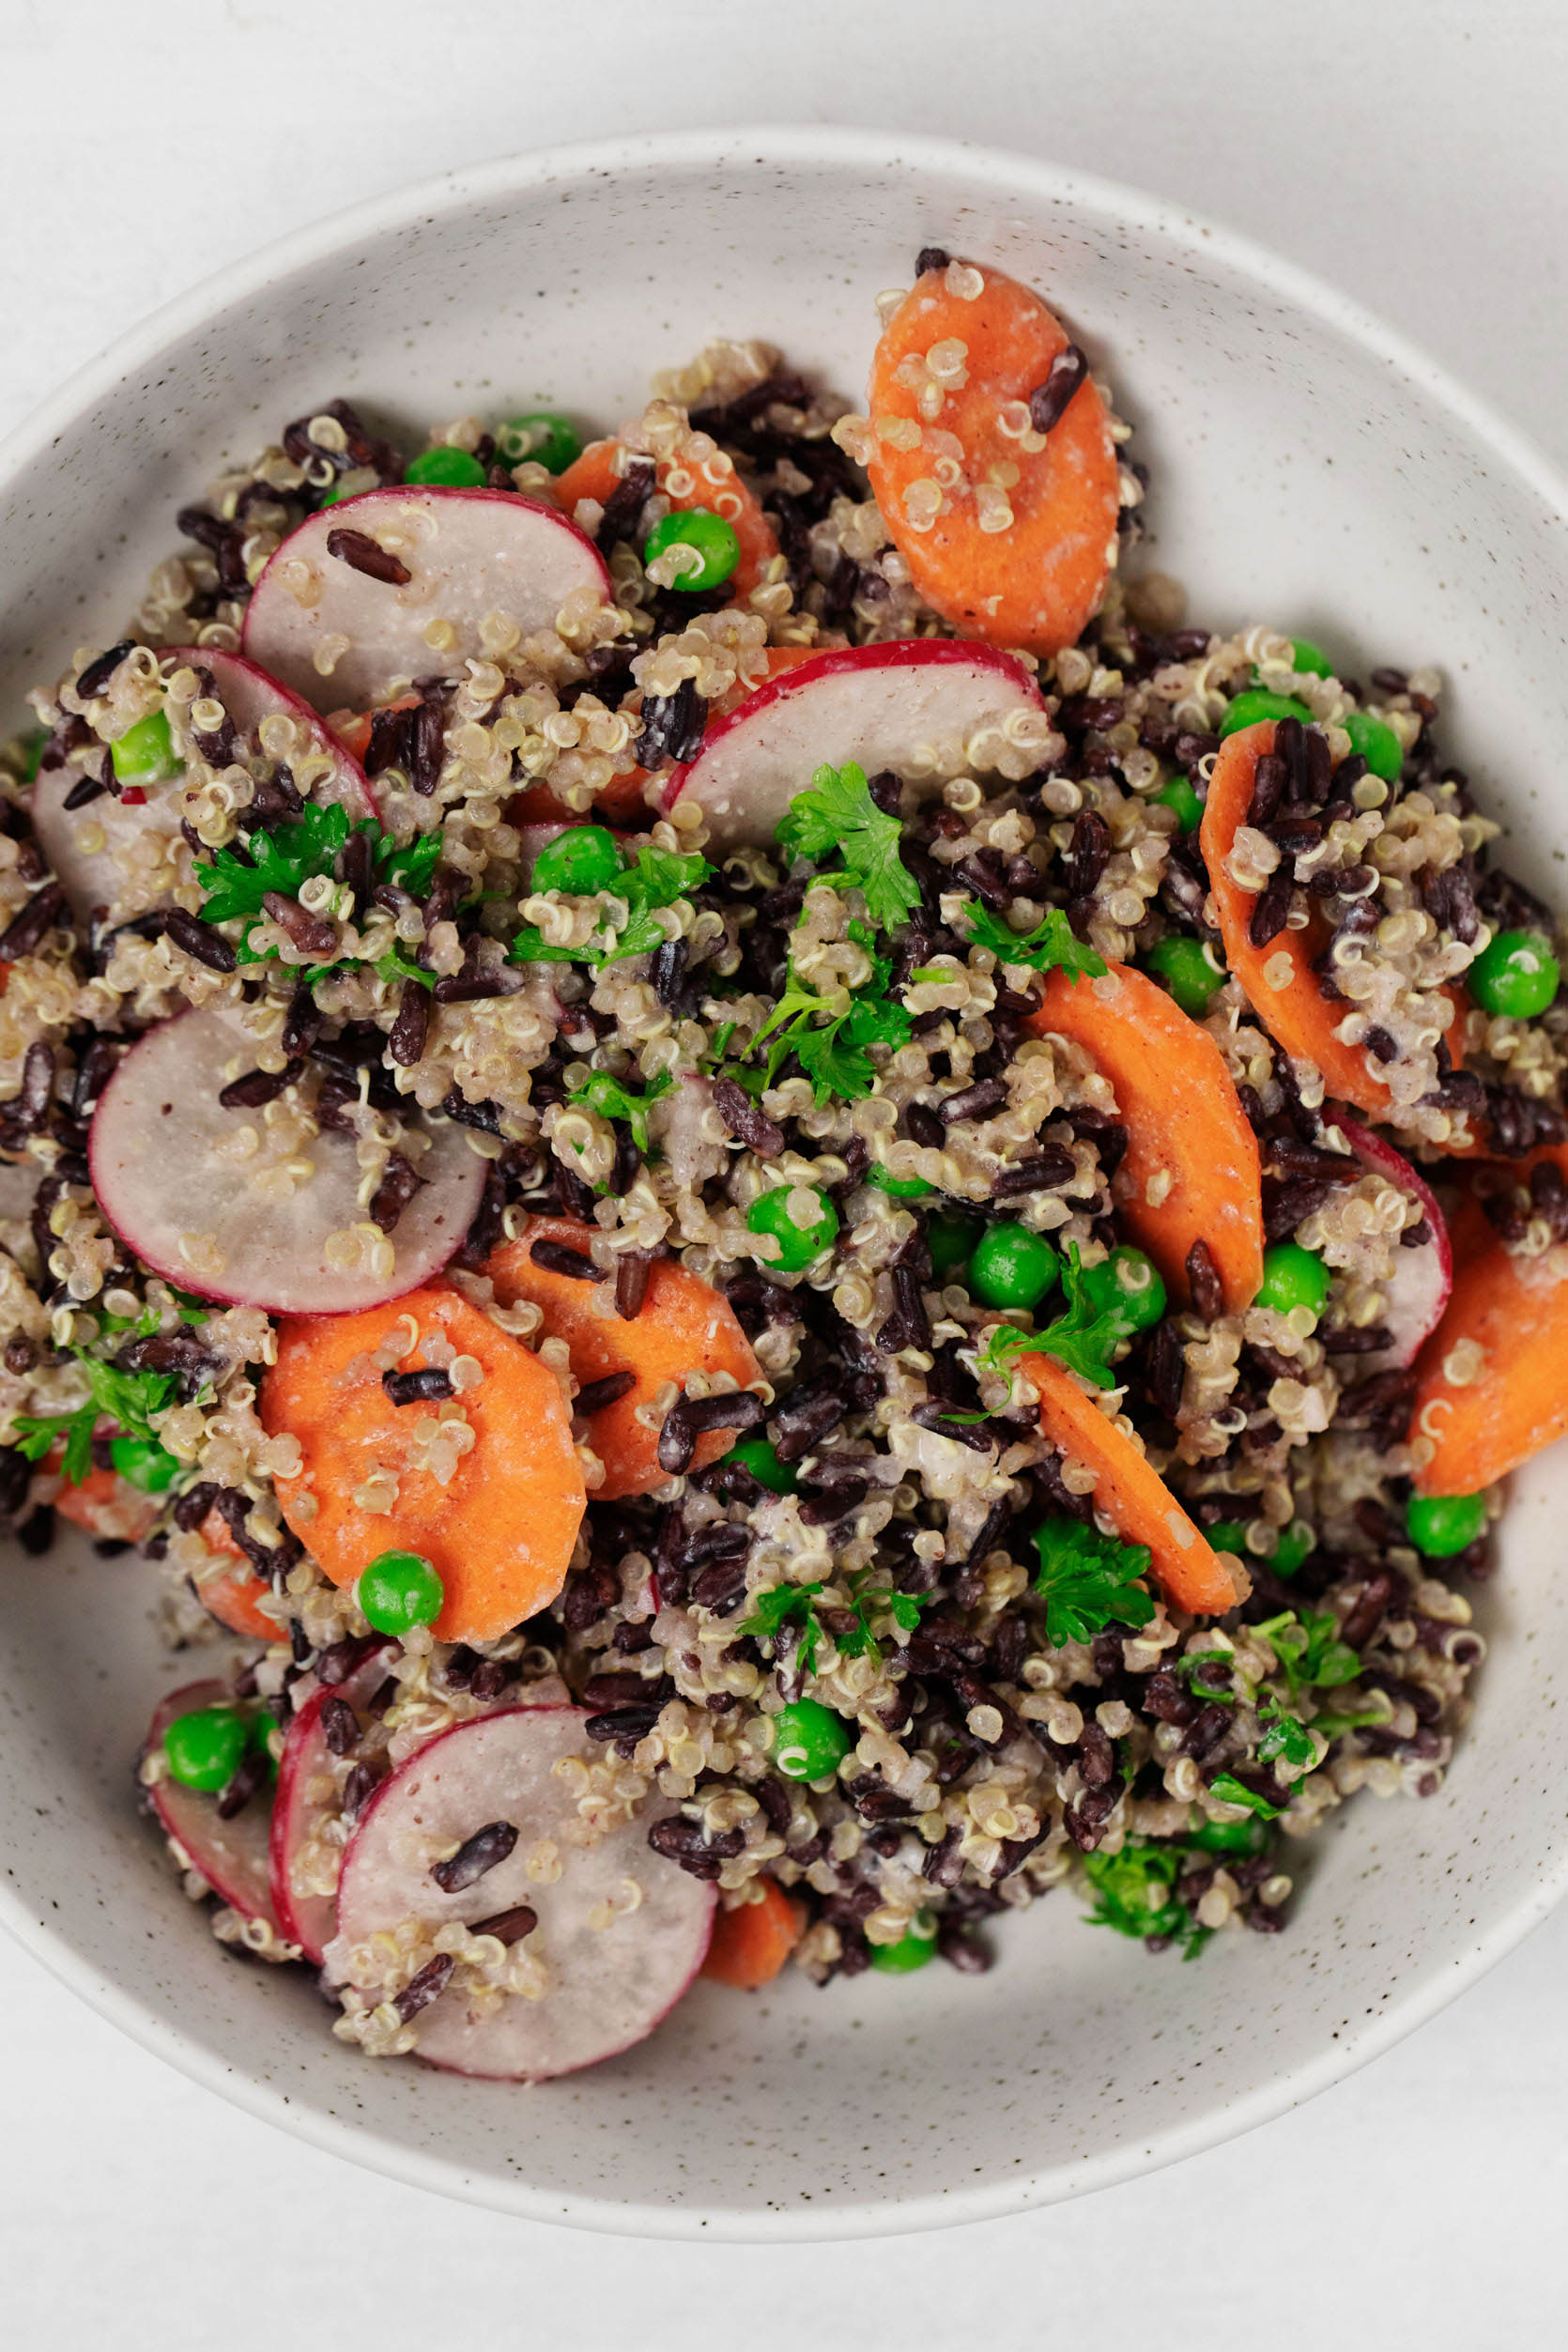 https://www.thefullhelping.com/wp-content/uploads/2018/04/Quinoa-black-rice-salad-2.jpg